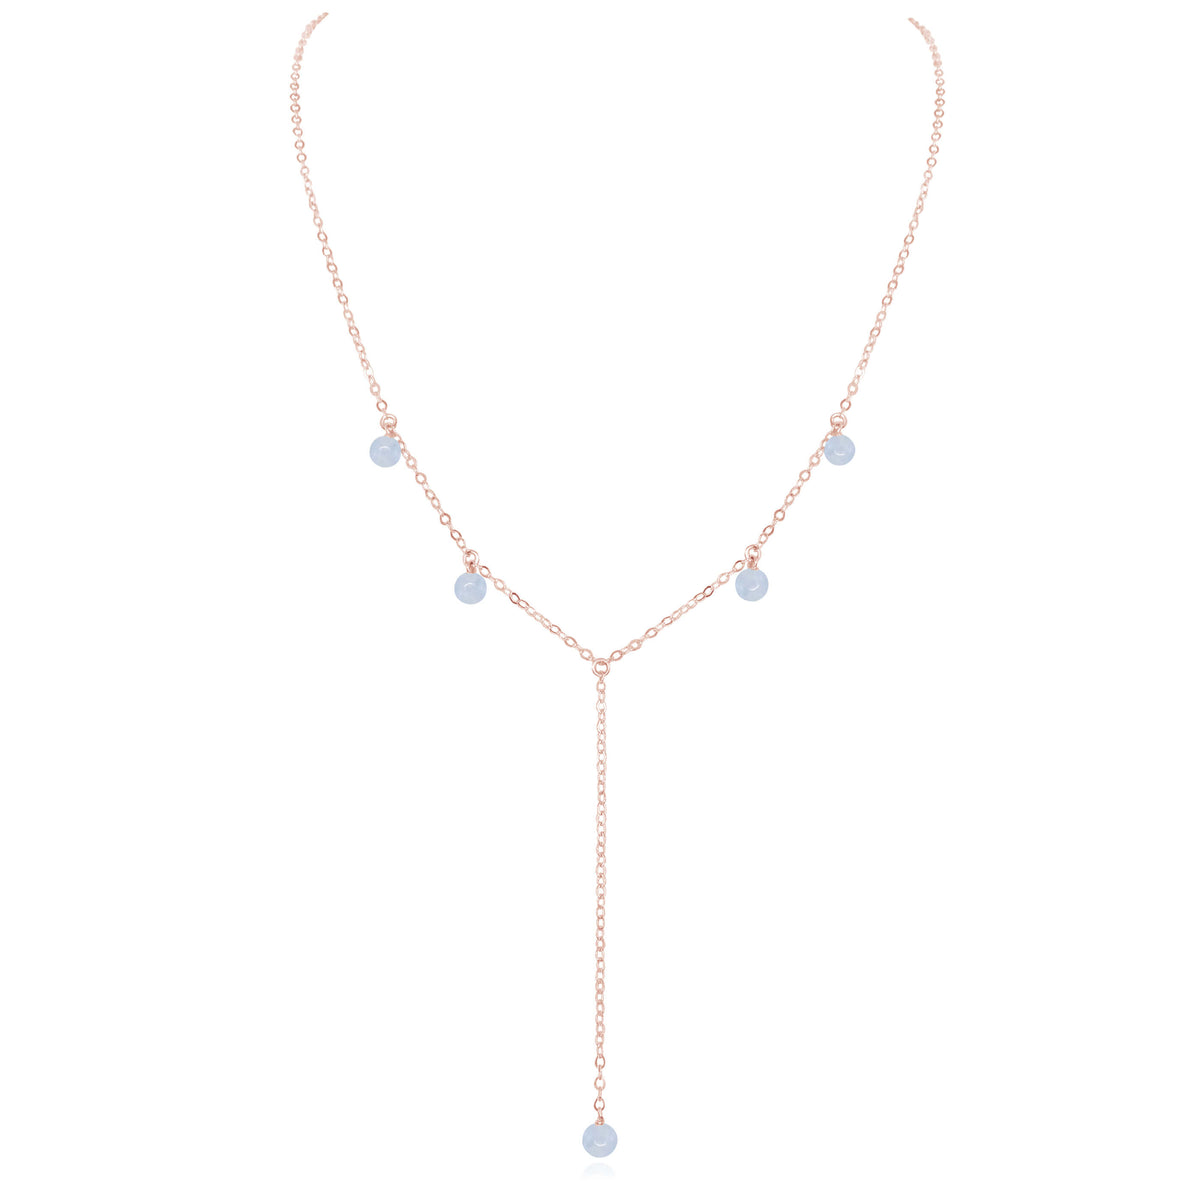 Boho Y Necklace - Blue Lace Agate - 14K Rose Gold Fill - Luna Tide Handmade Jewellery